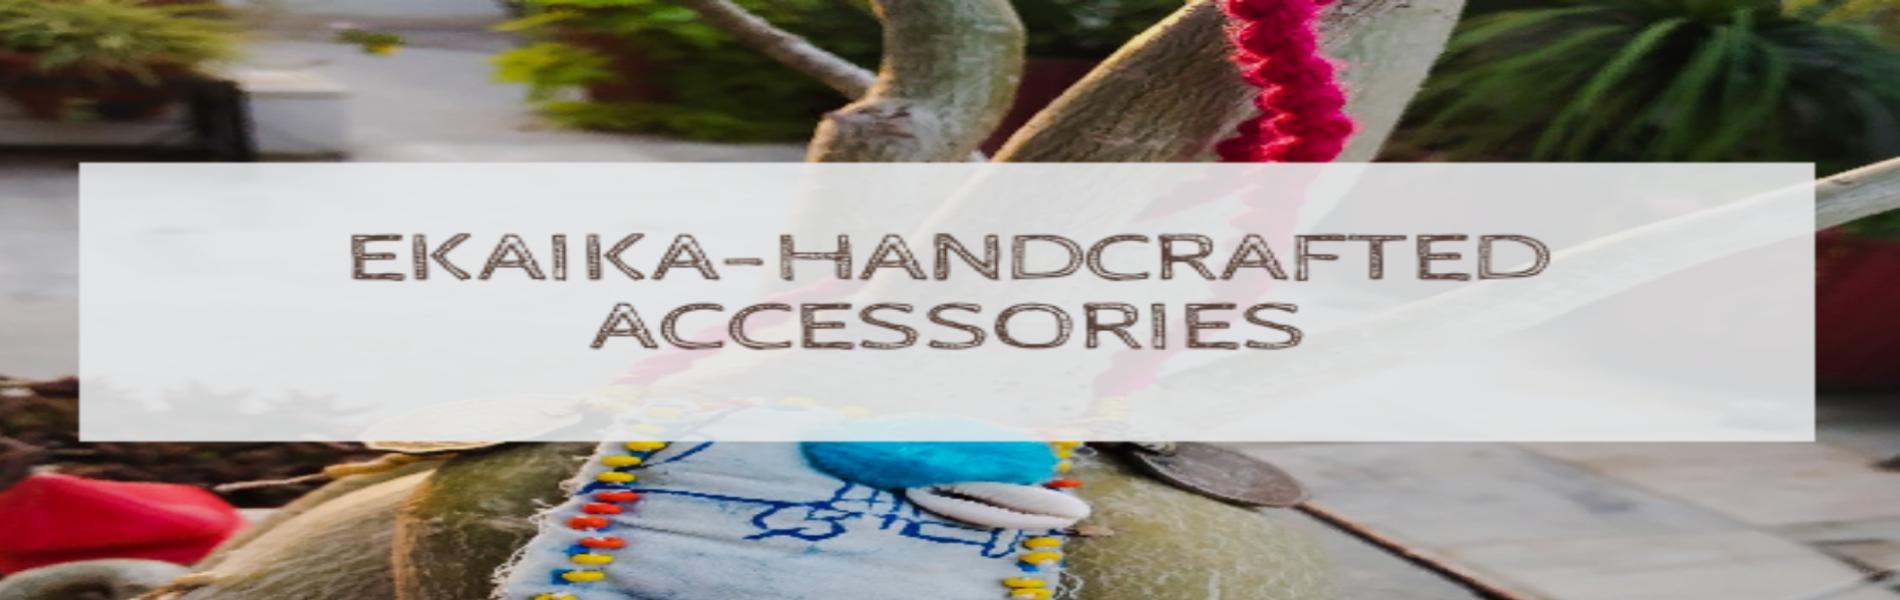 Ekaika-Handcrafted accessories